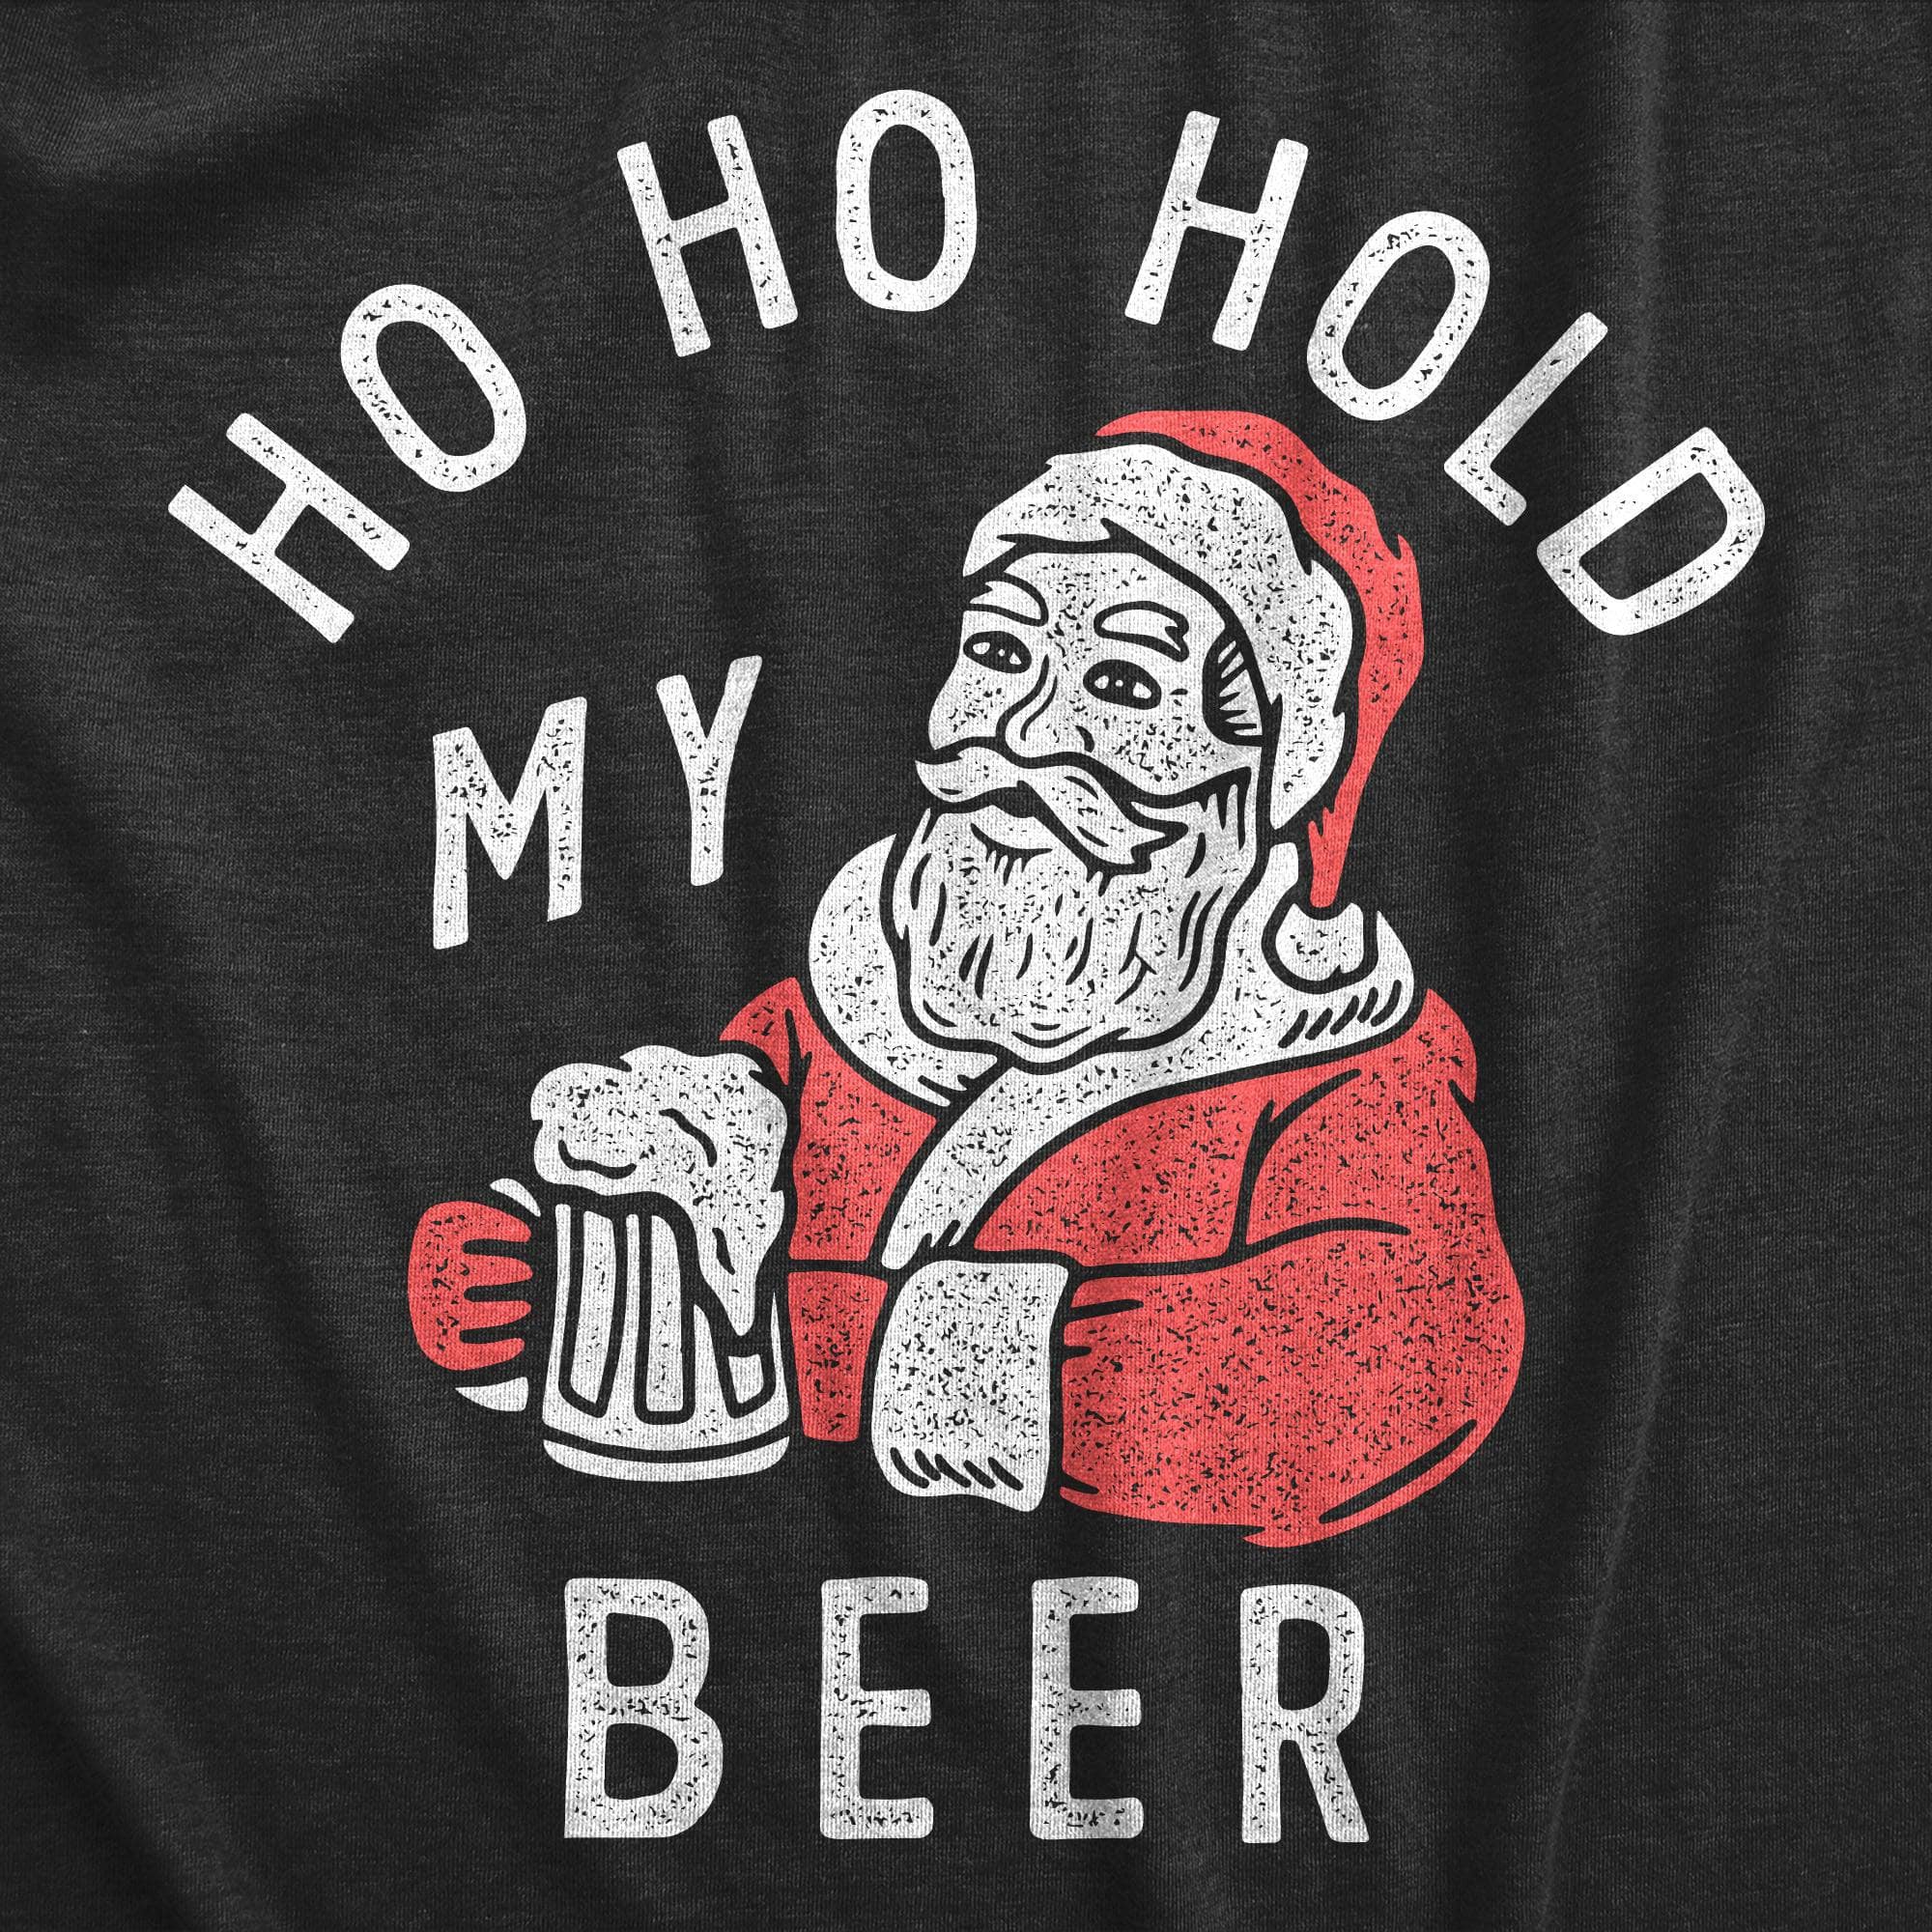 Ho Ho Hold My Beer Men's Tshirt  -  Crazy Dog T-Shirts